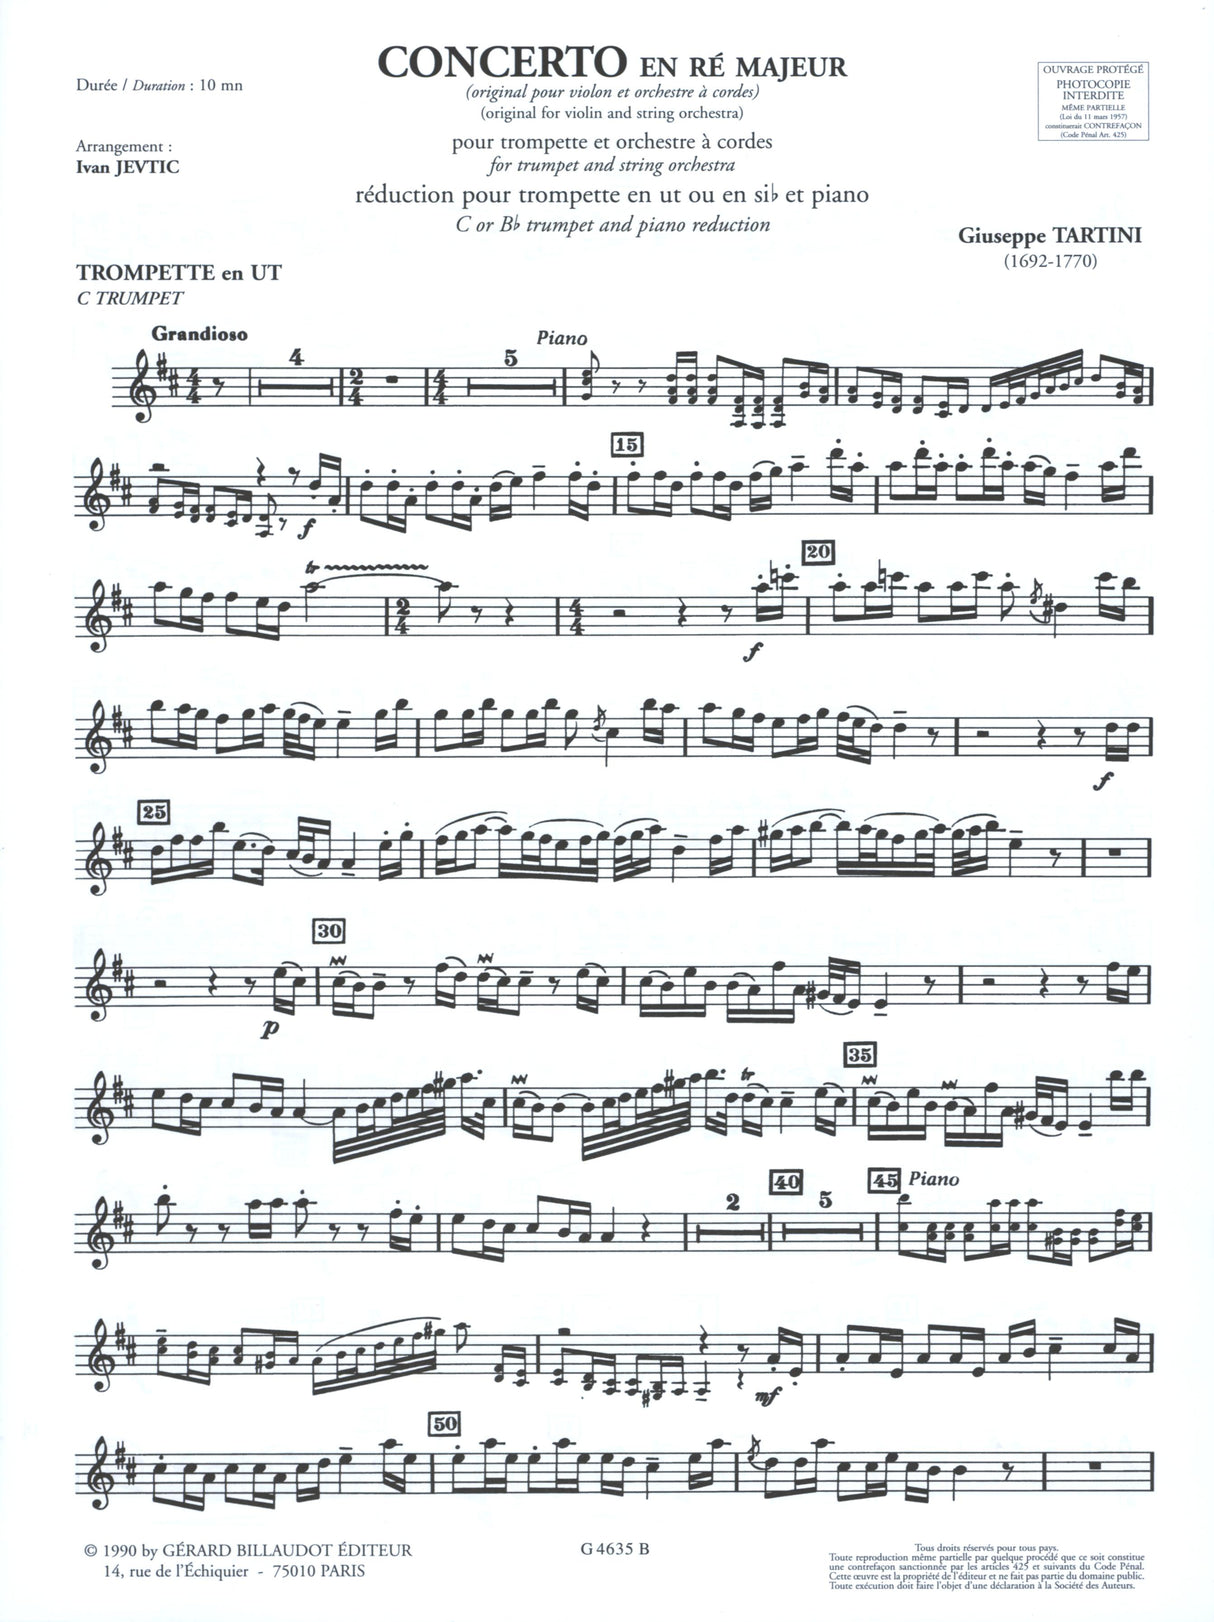 Tartini: Concerto in D Major (arr. for trumpet)